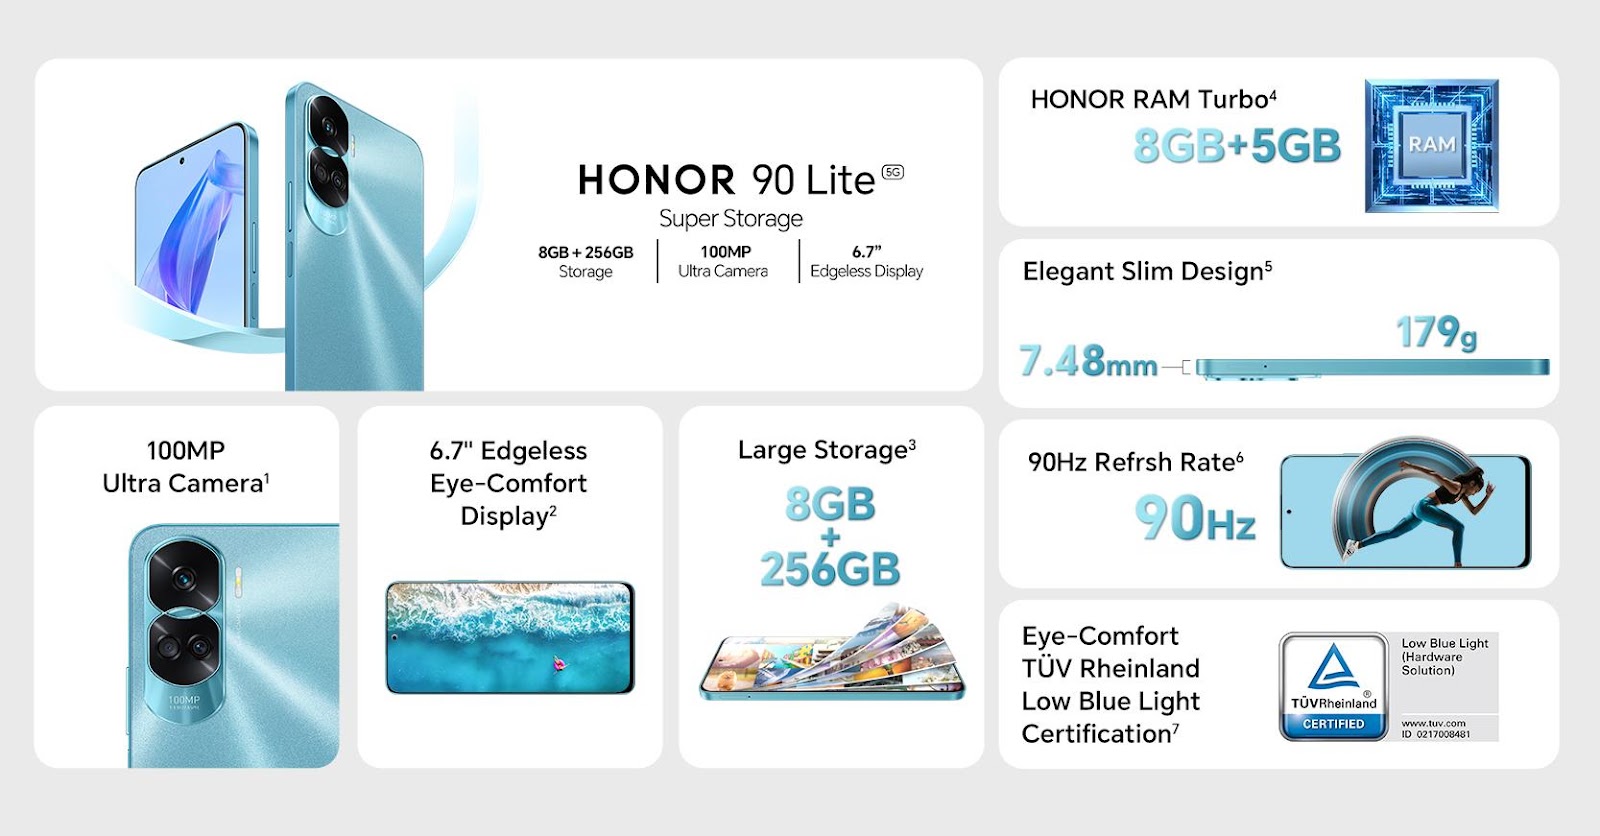 HONOR 90 Lite 5G 100MP Ultra Camera 256 GB storage priced at P12